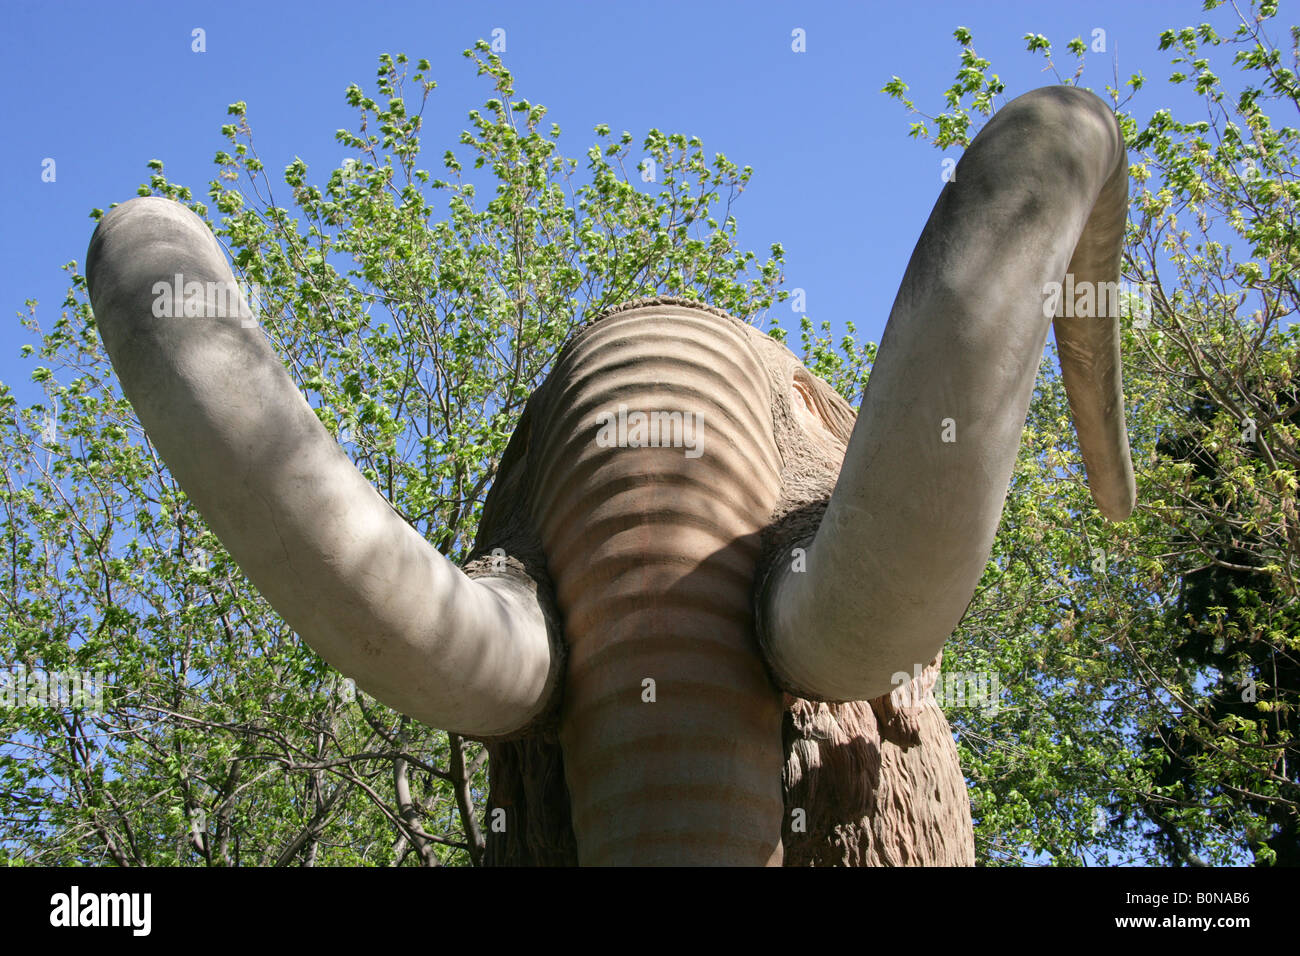 Woolly Mammoth Statue, Parc de la Ciutadella, Barcelona, Spain Stock Photo